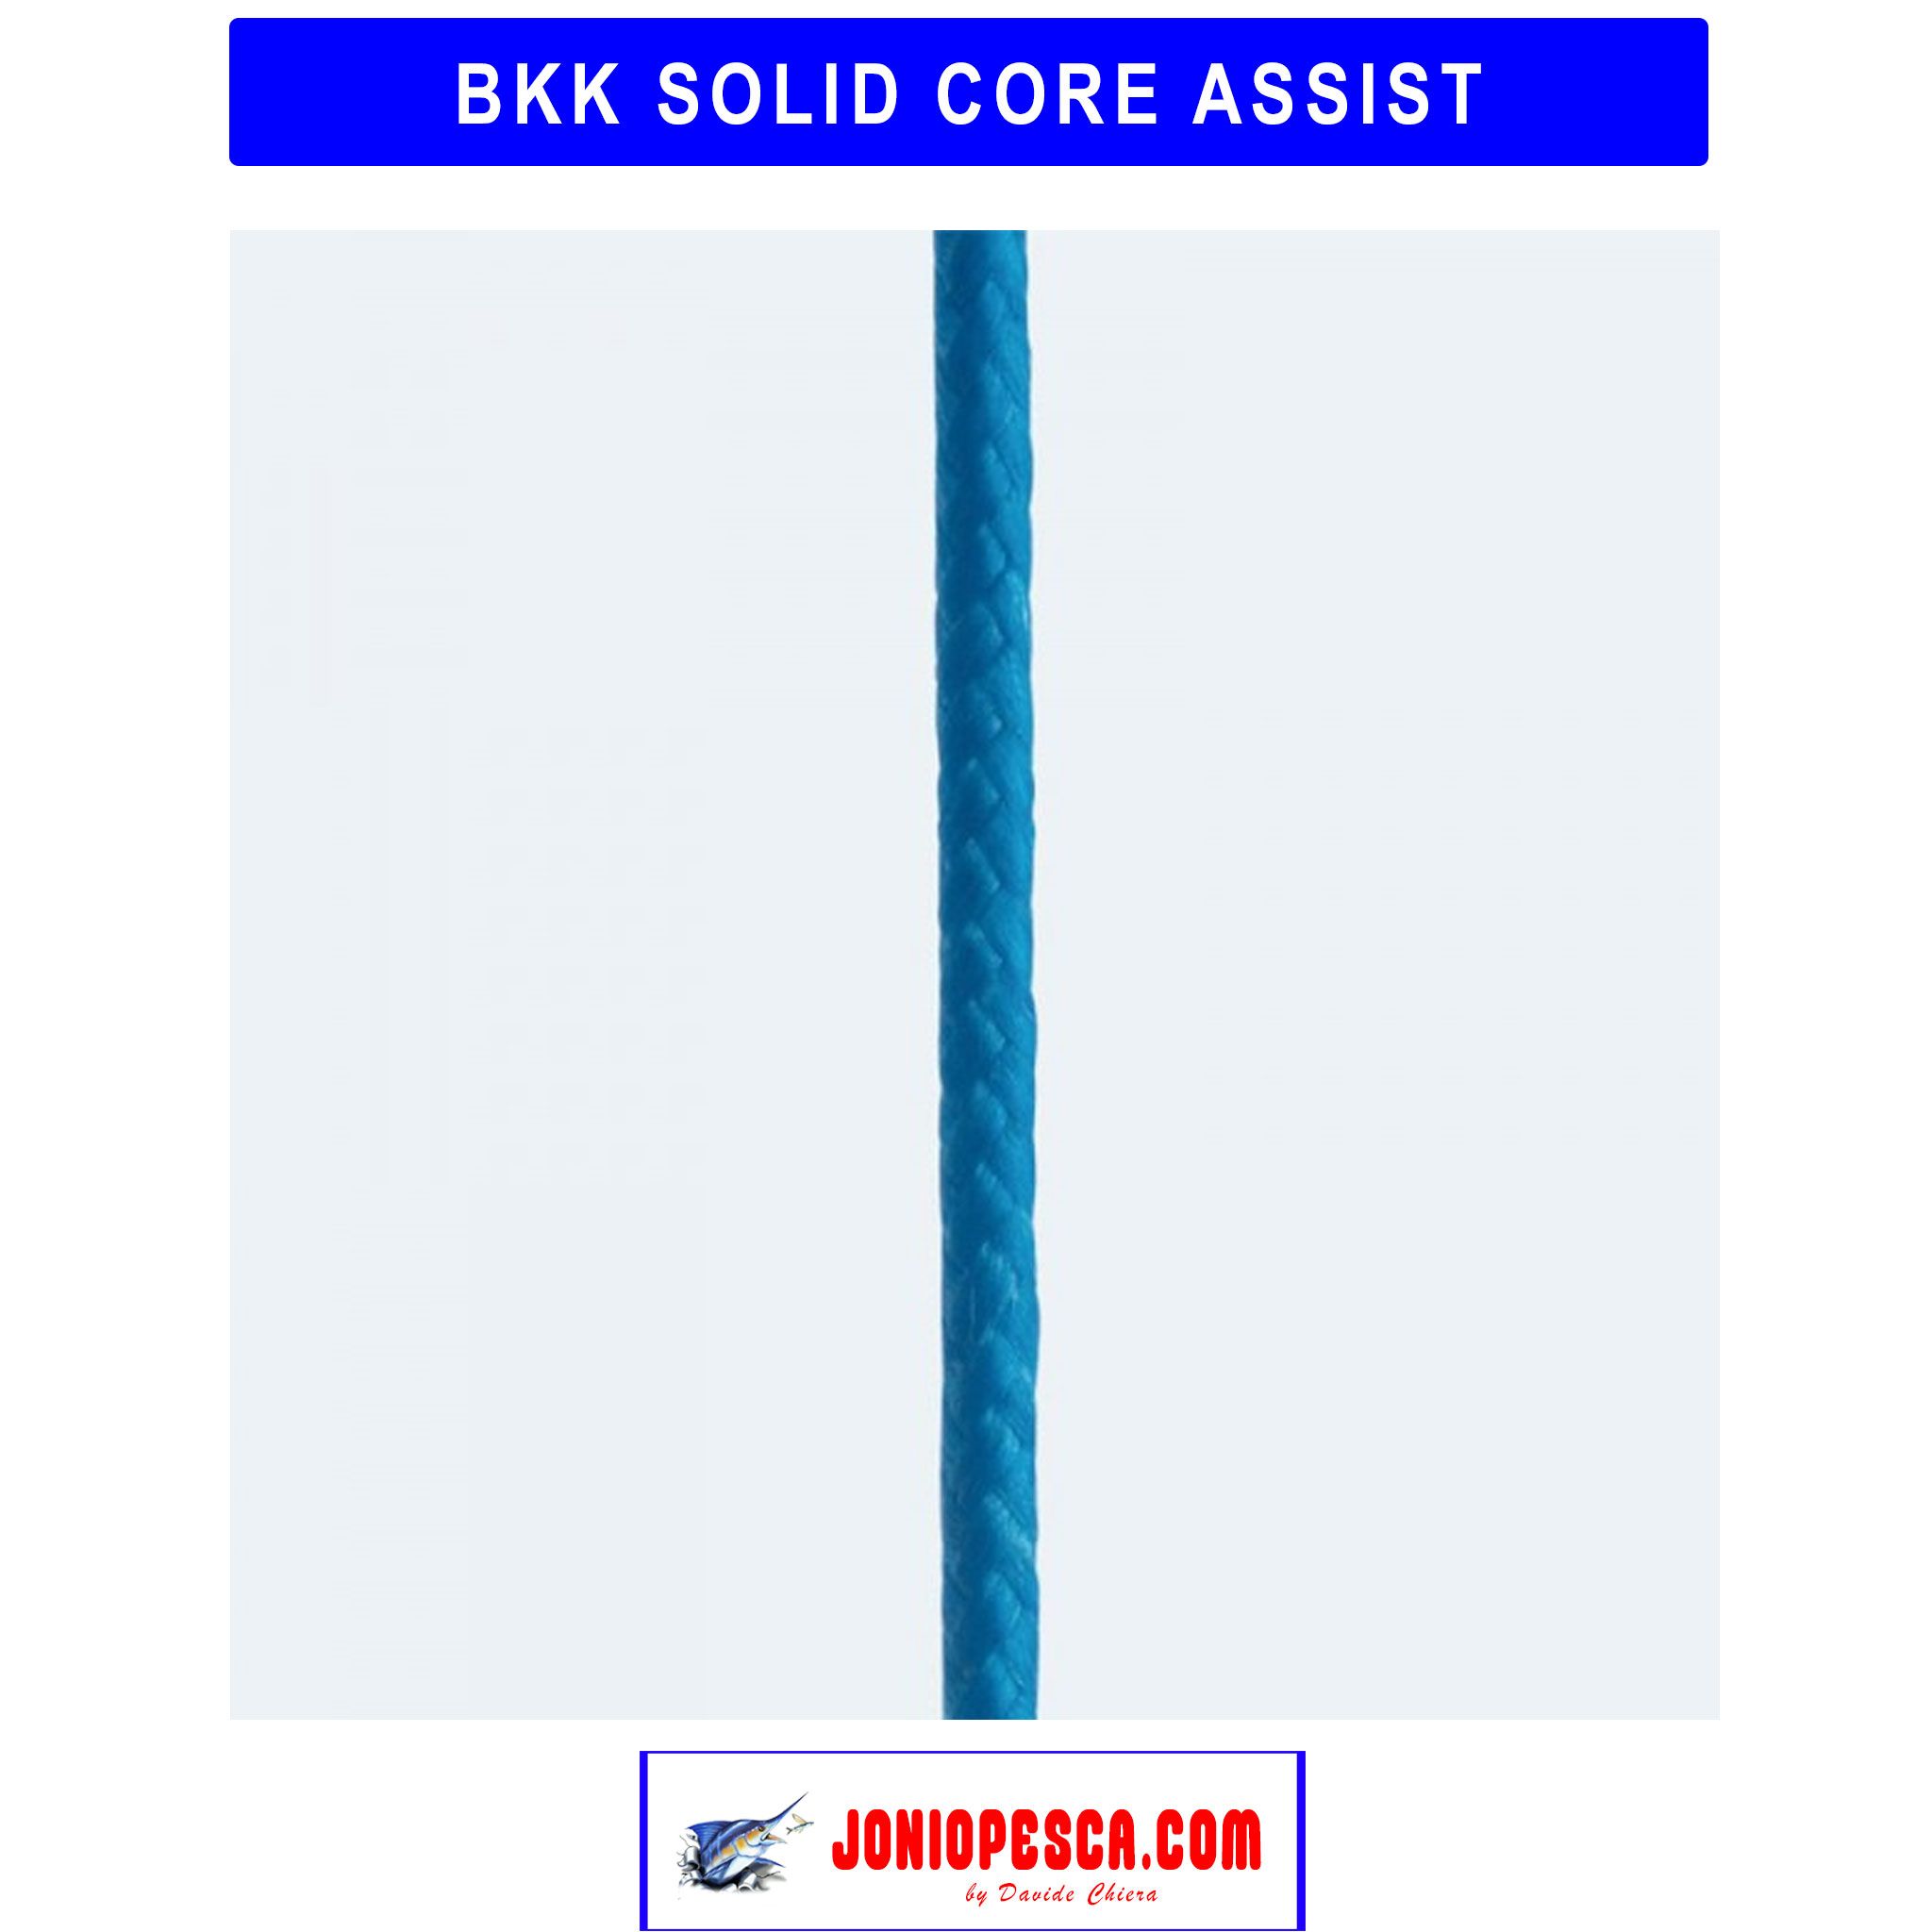 bkk-solid-core-assist-1